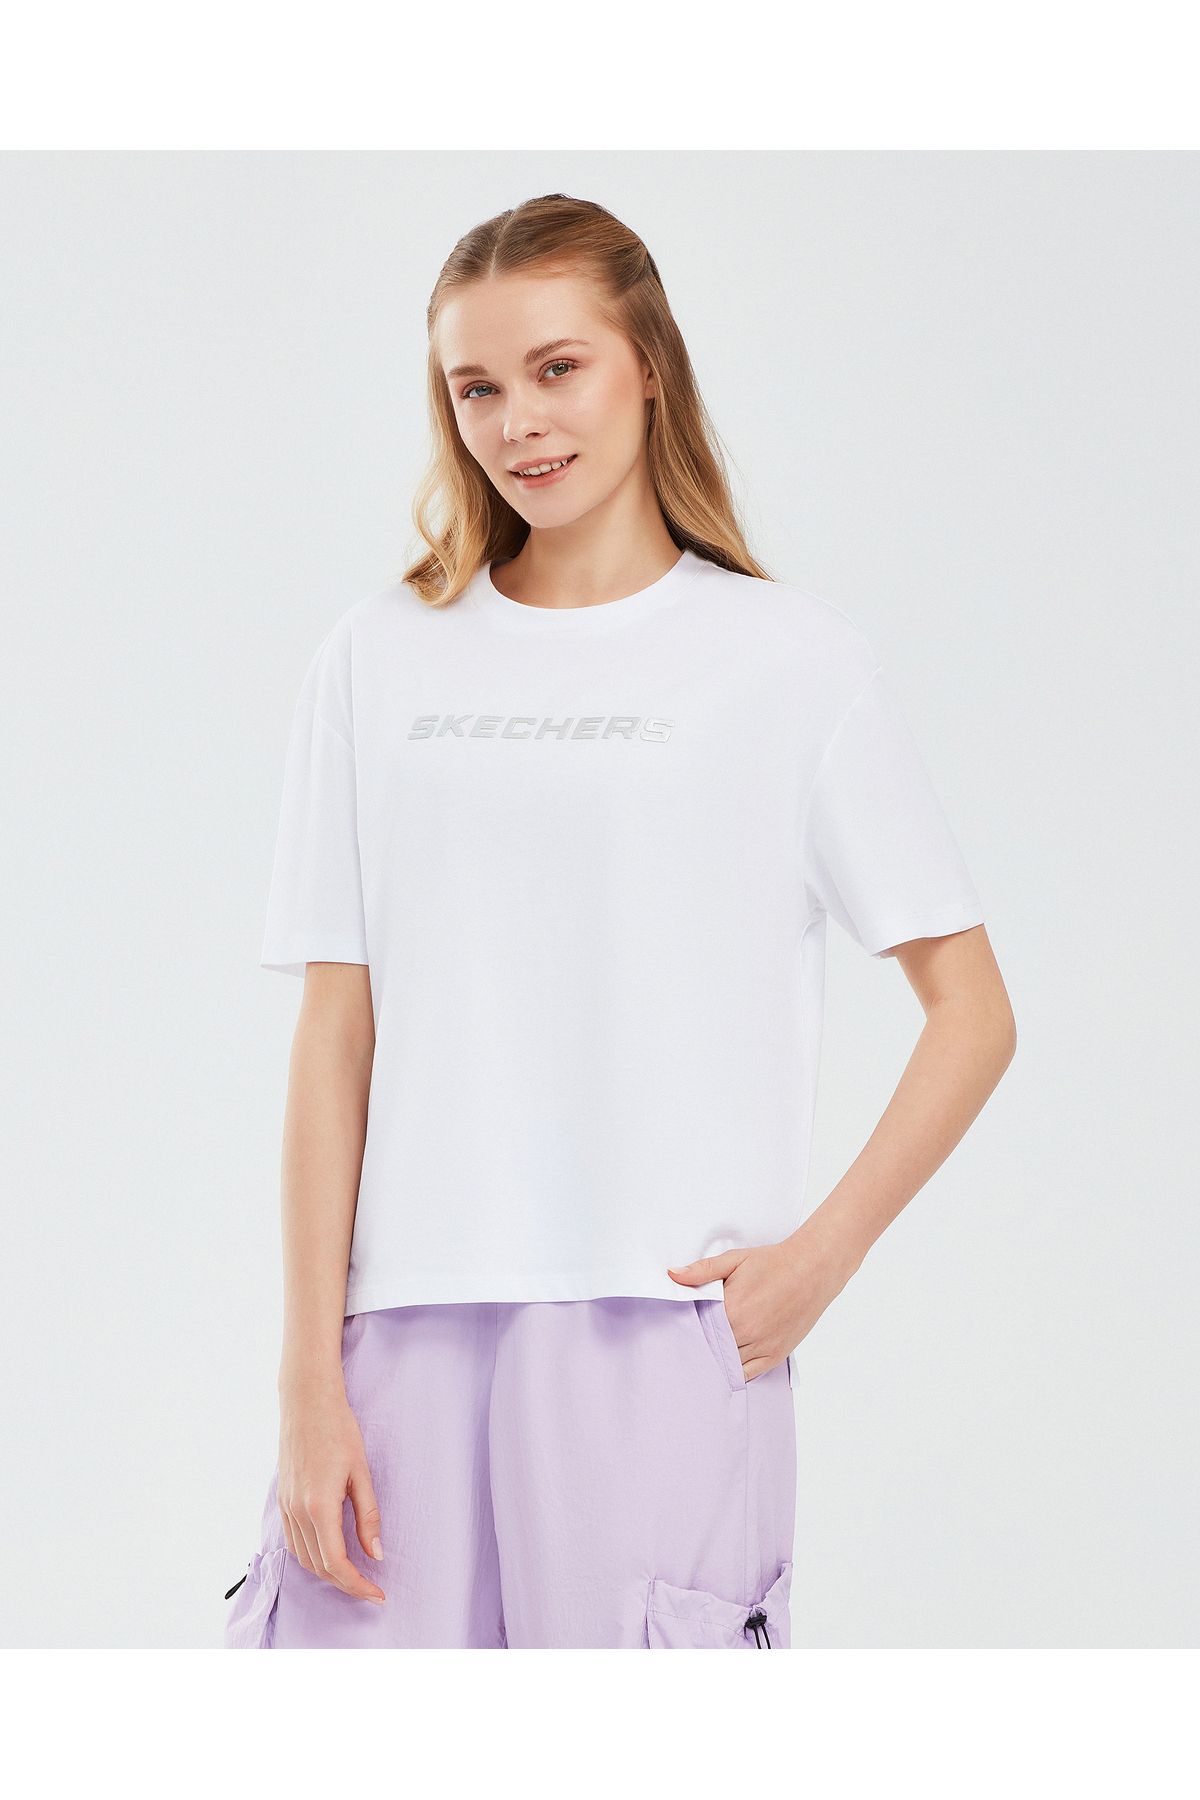 Skechers Graphic T-shirt W Short Sleeve Kadın Beyaz Tshirt S241012-100